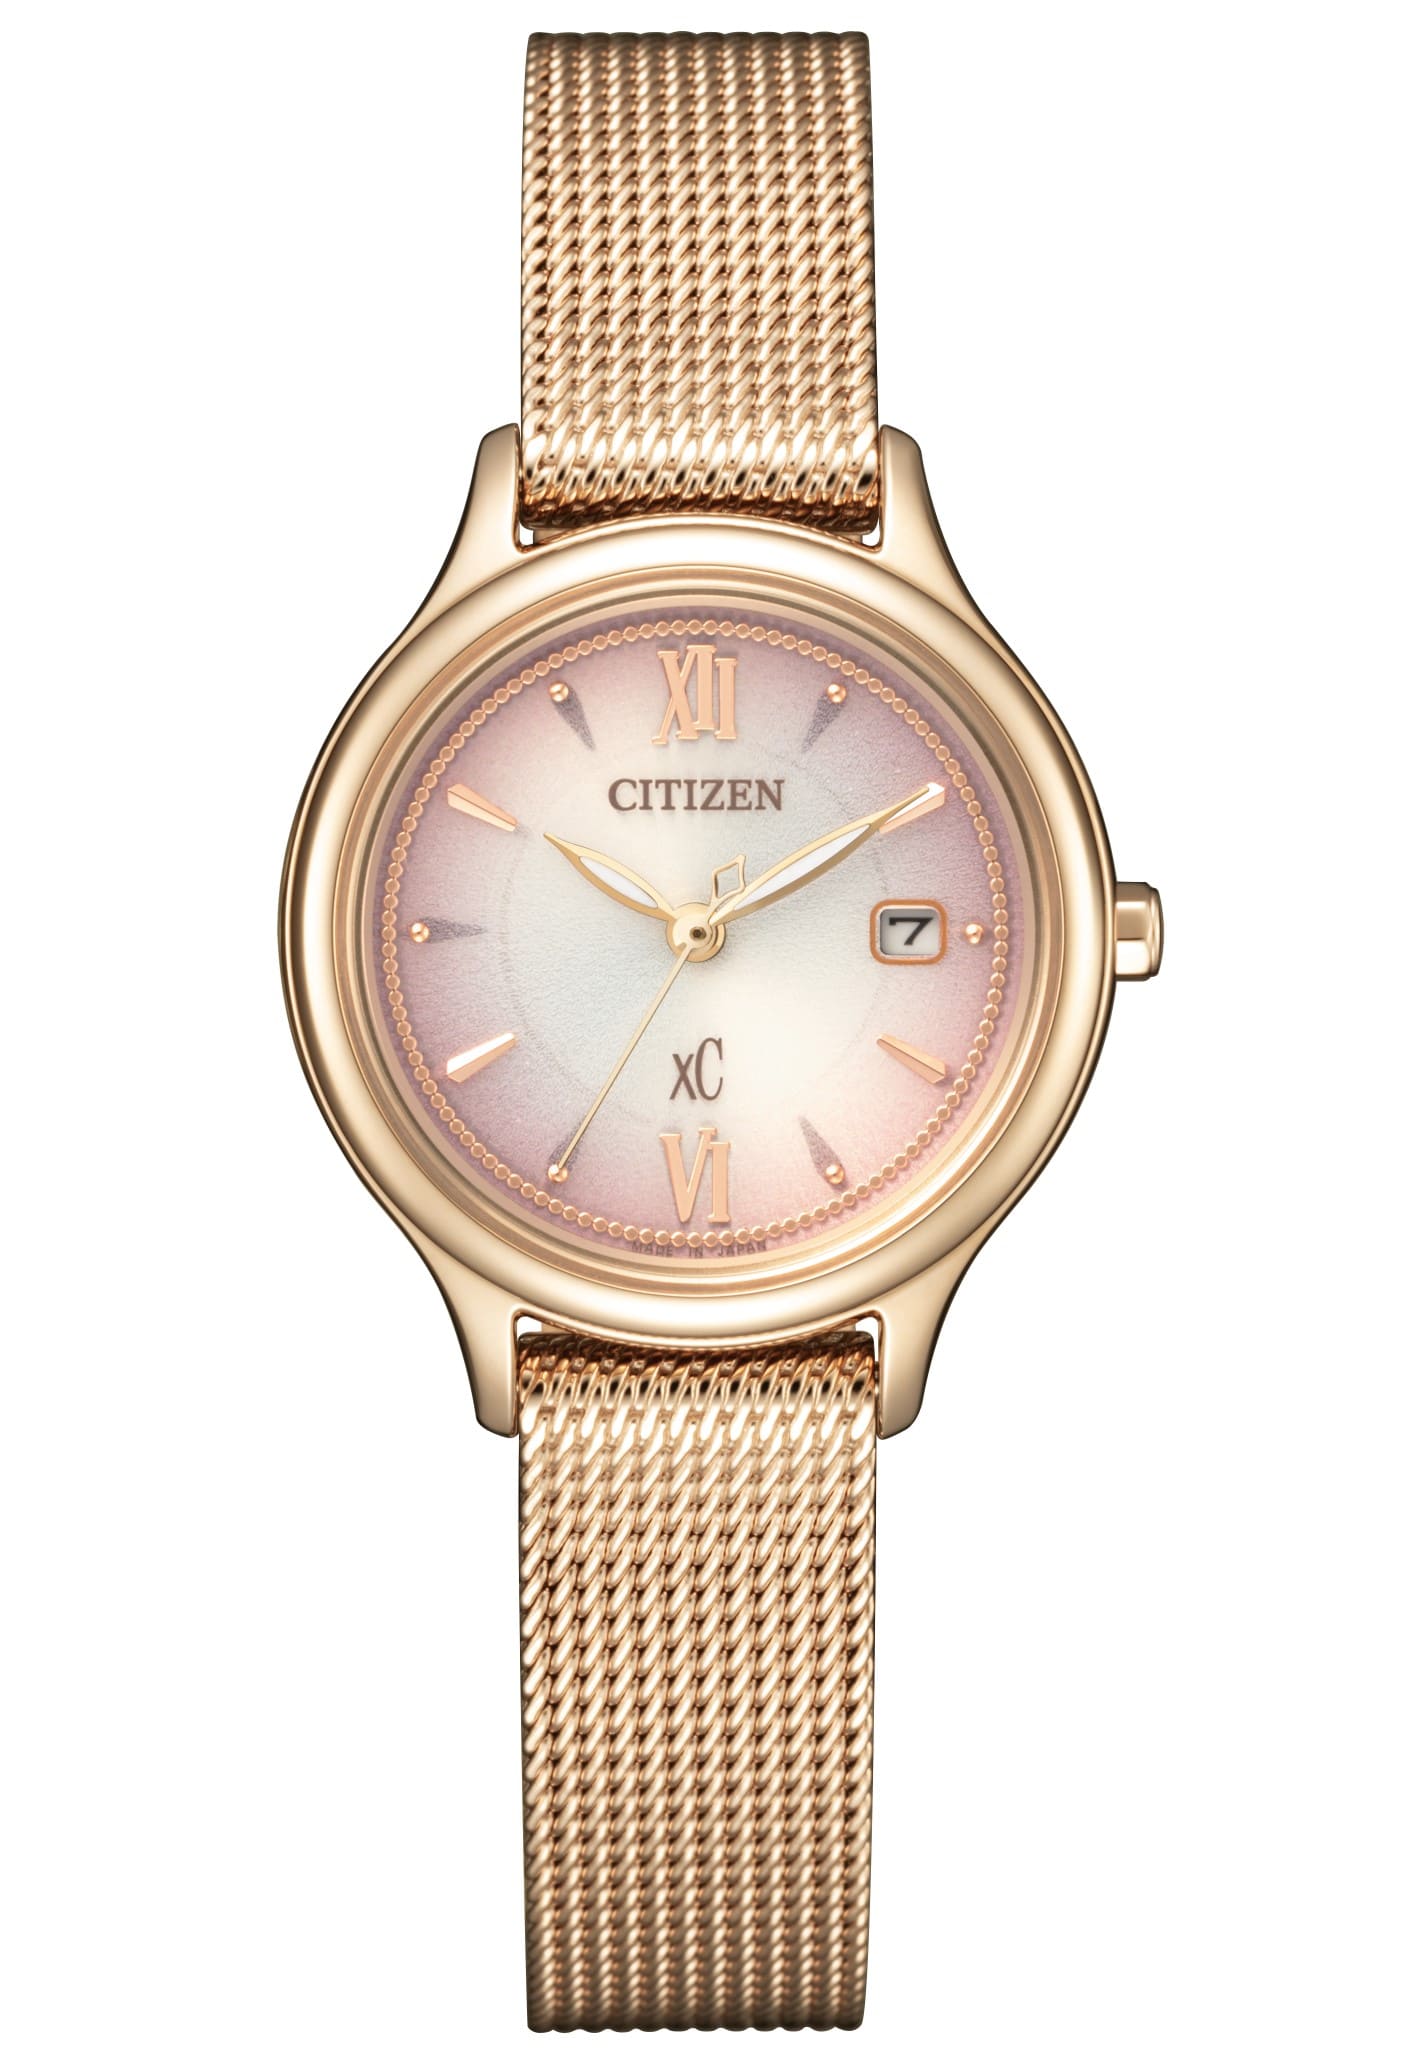 CITIZEN推出「韶光 櫻花限定款」，青春撞色機械錶同上市